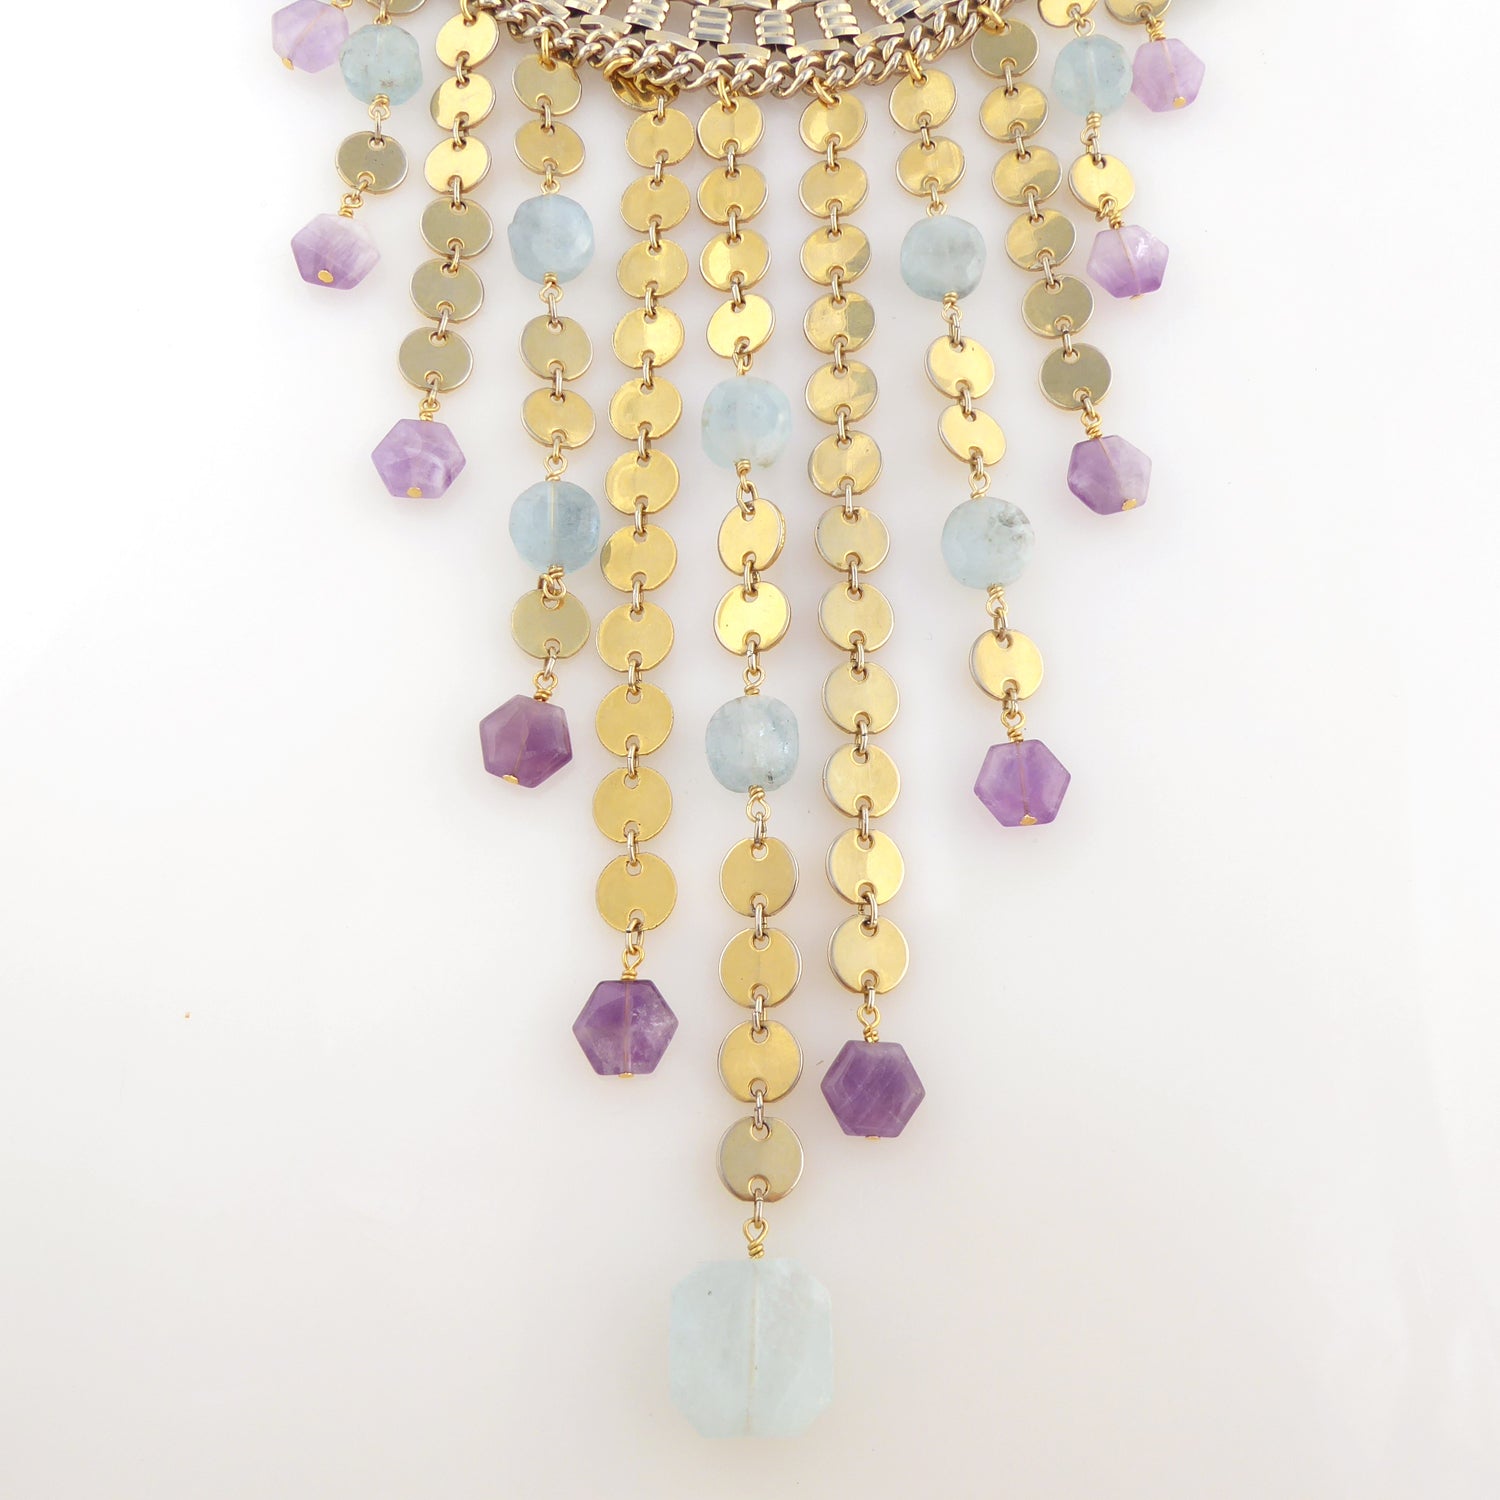 Carmeline aquamarine and amethyst necklace by Jenny Dayco 3